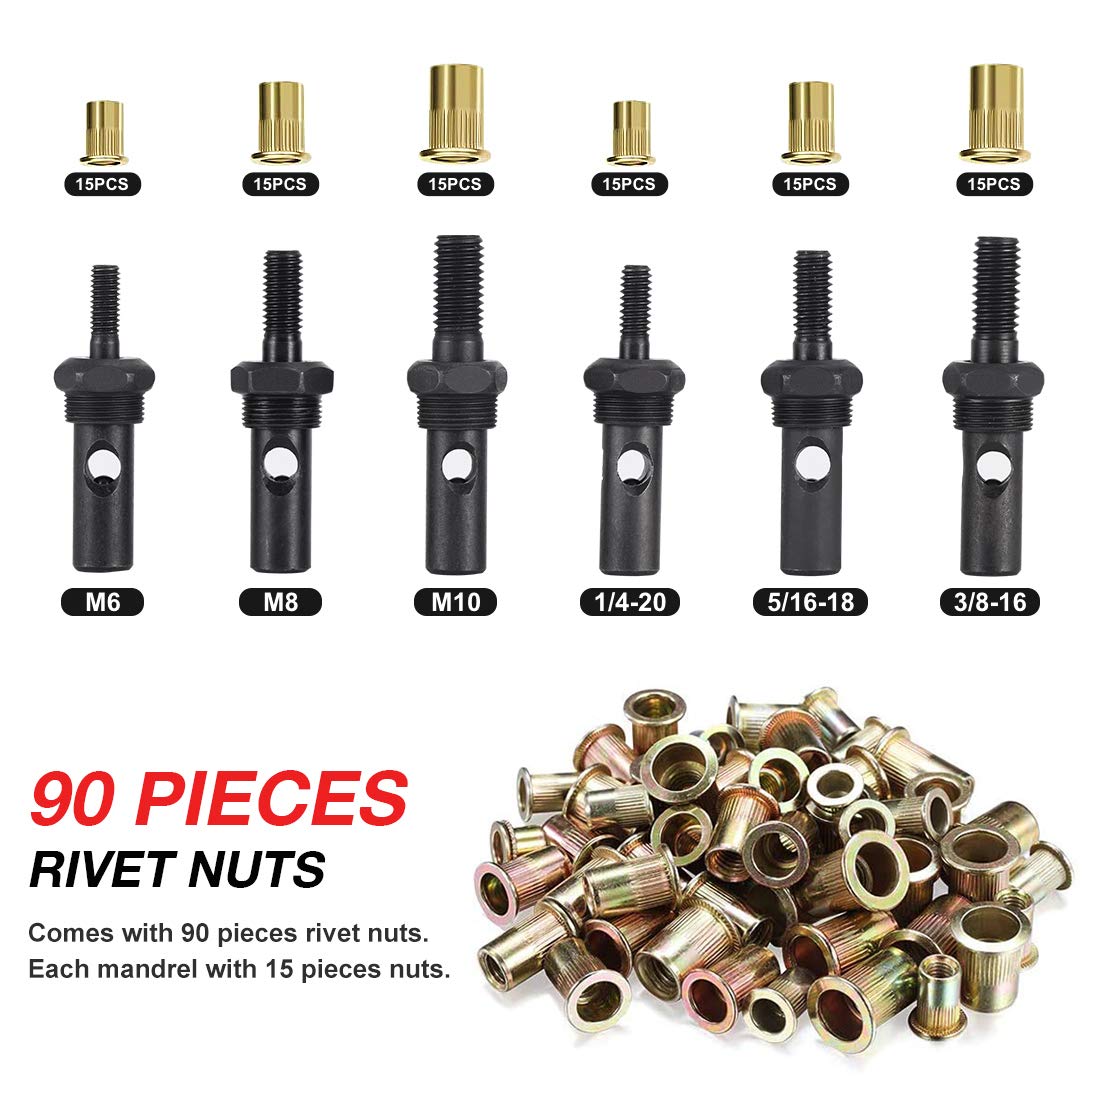 AOBEN 14" Rivet Nut Tool, Professional Hand Rivet Nut Setter Kit Labor-Saving and Compact Design Including 6 Interchangeable Man